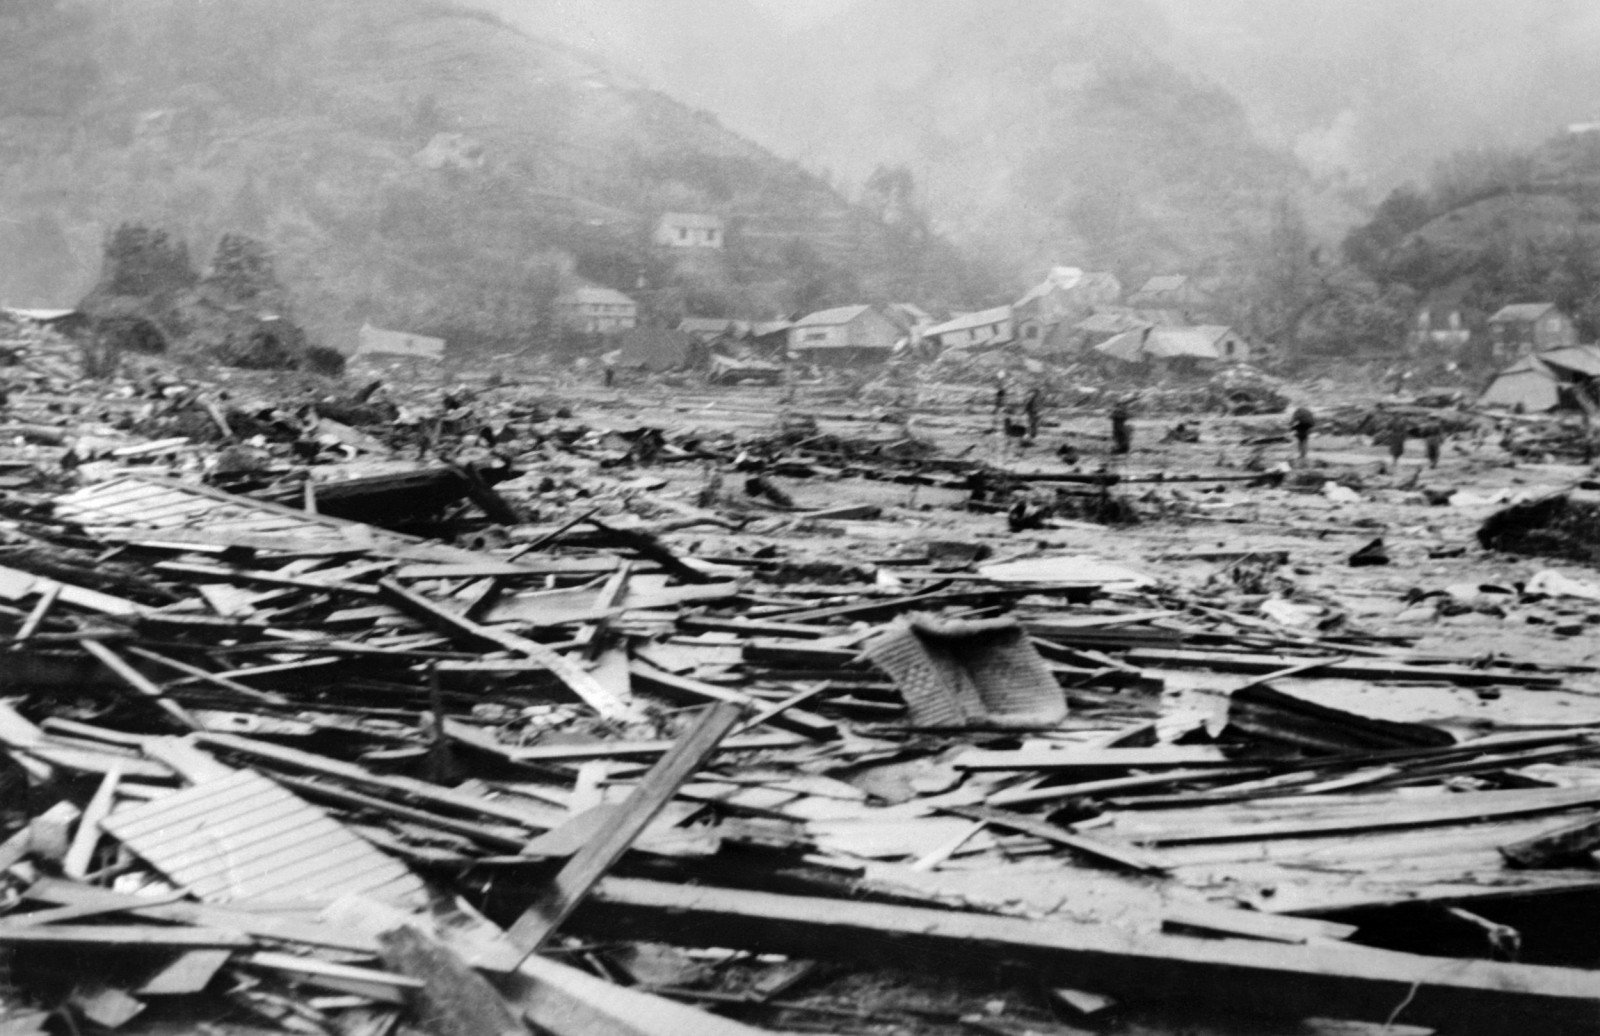 1960 valdivia earthquake case study